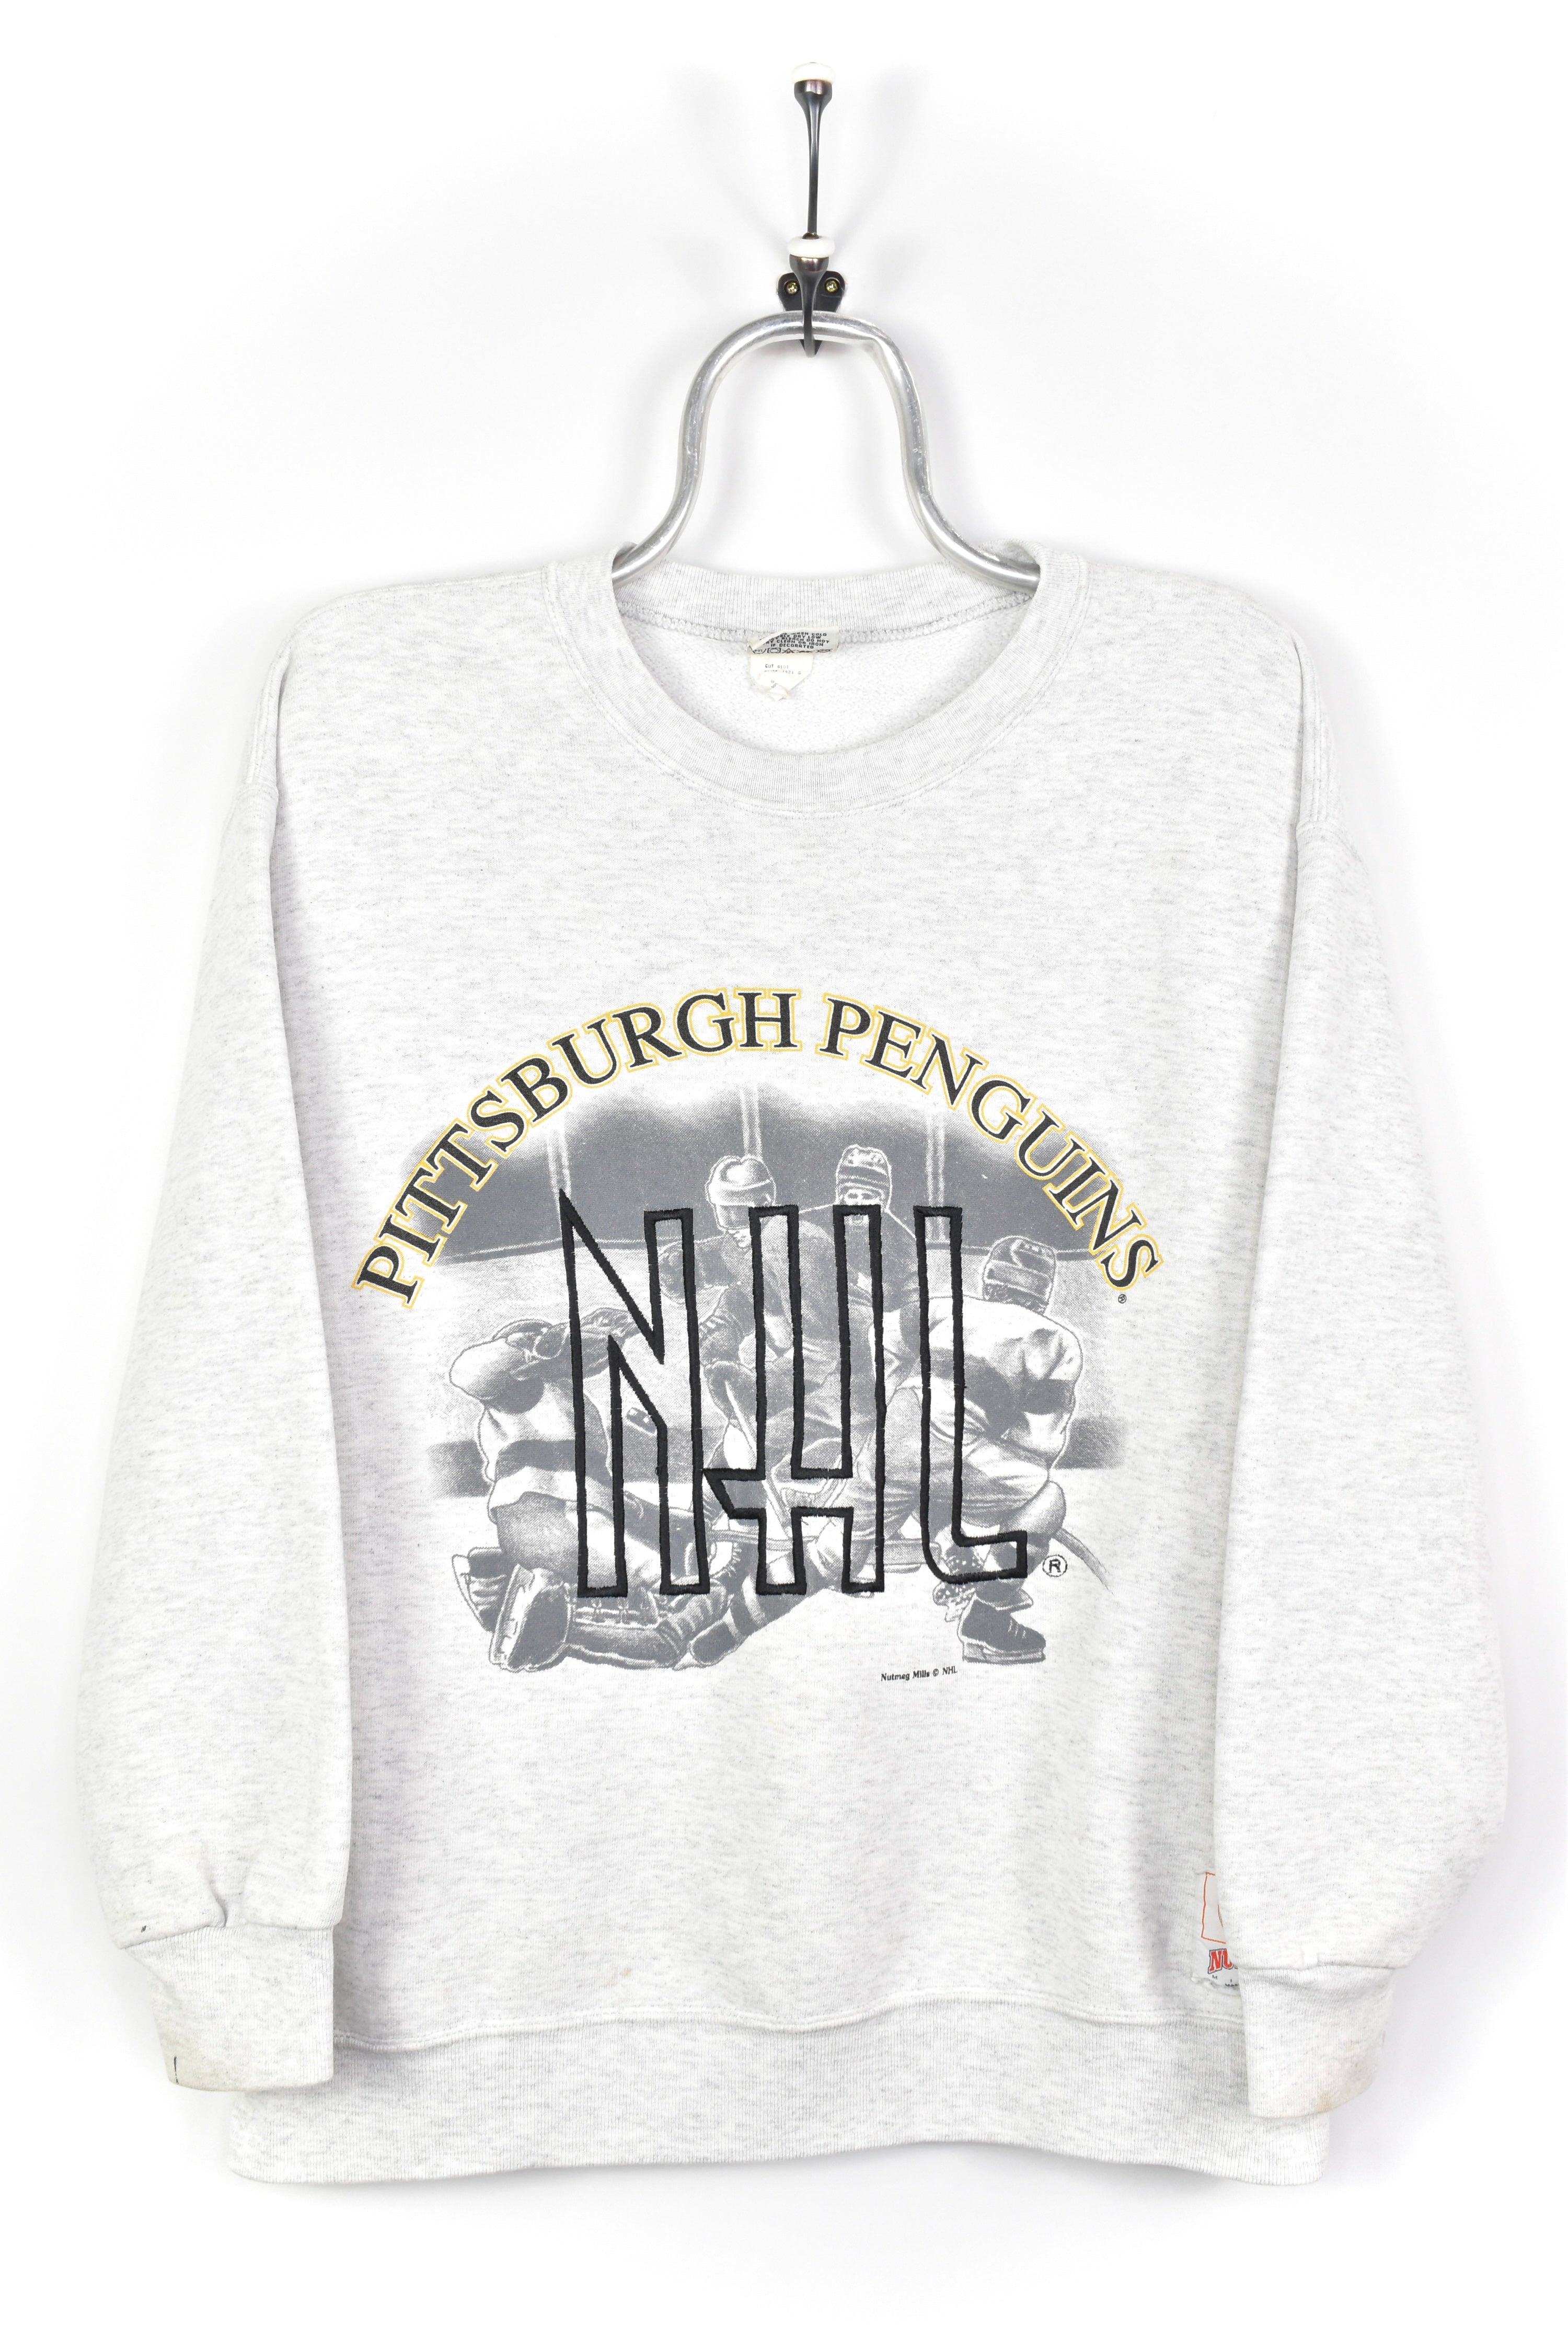 Pittsburgh Penguins - Pro Sweatshirts